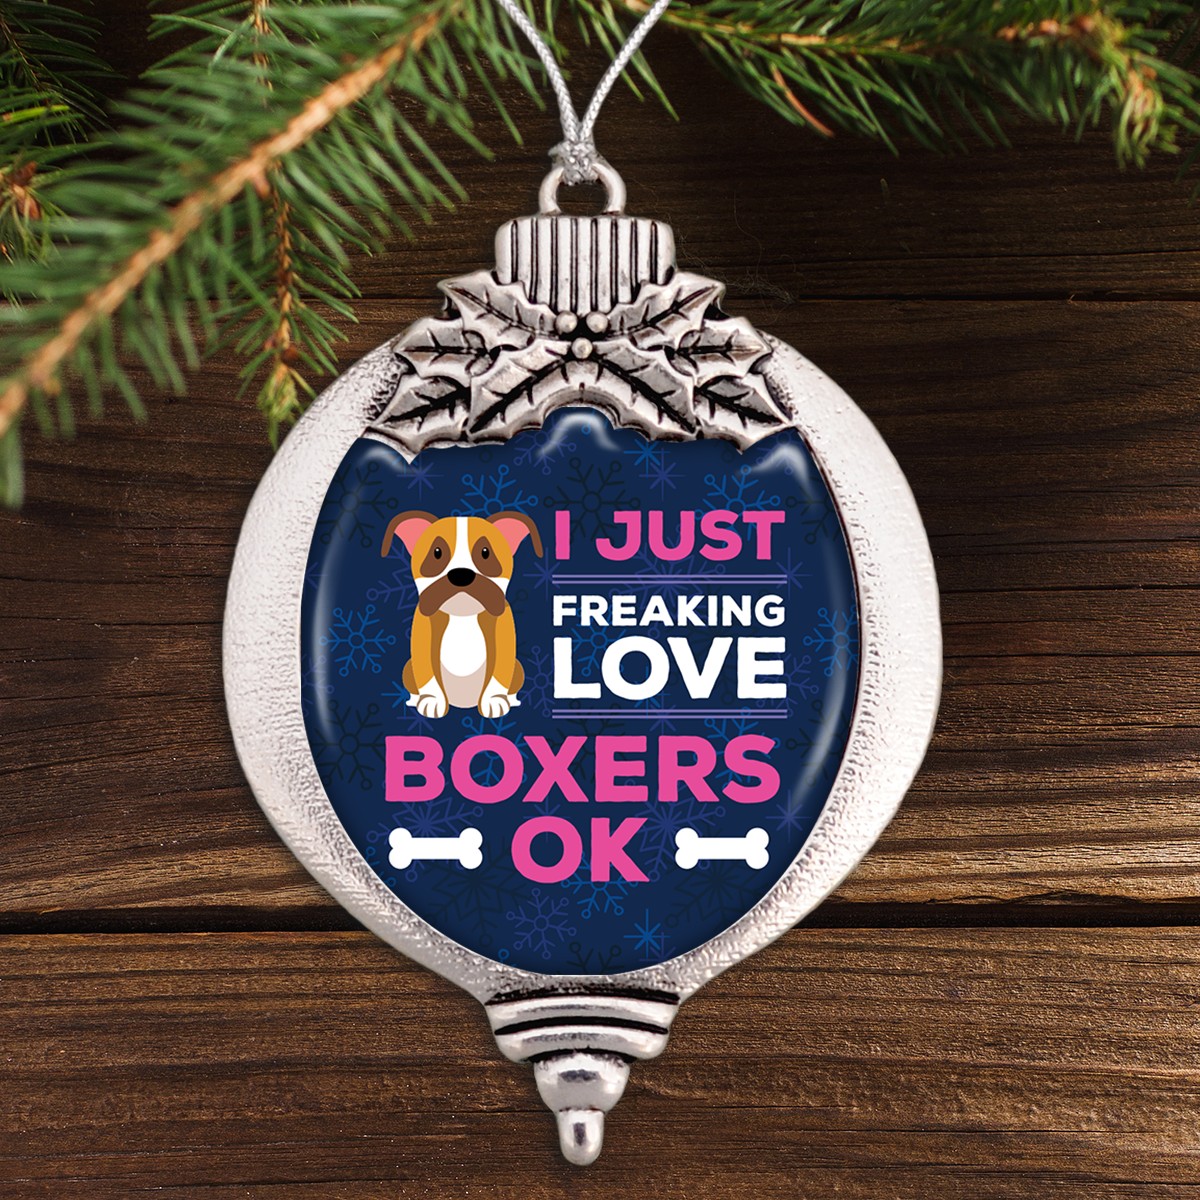 I Just Freaking Love Boxers, OK? - Boxer Bulb Ornament